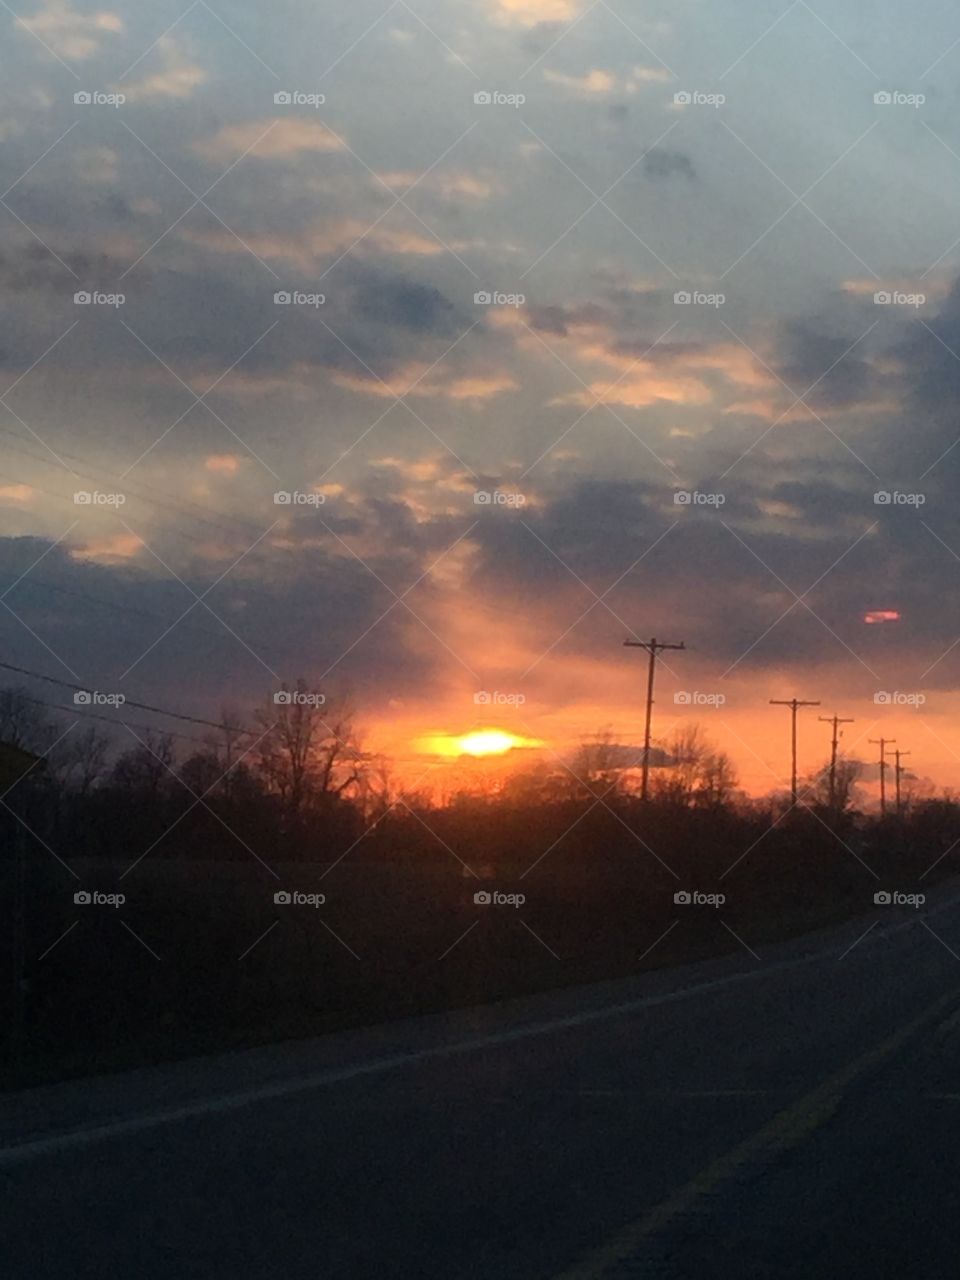 Sunset